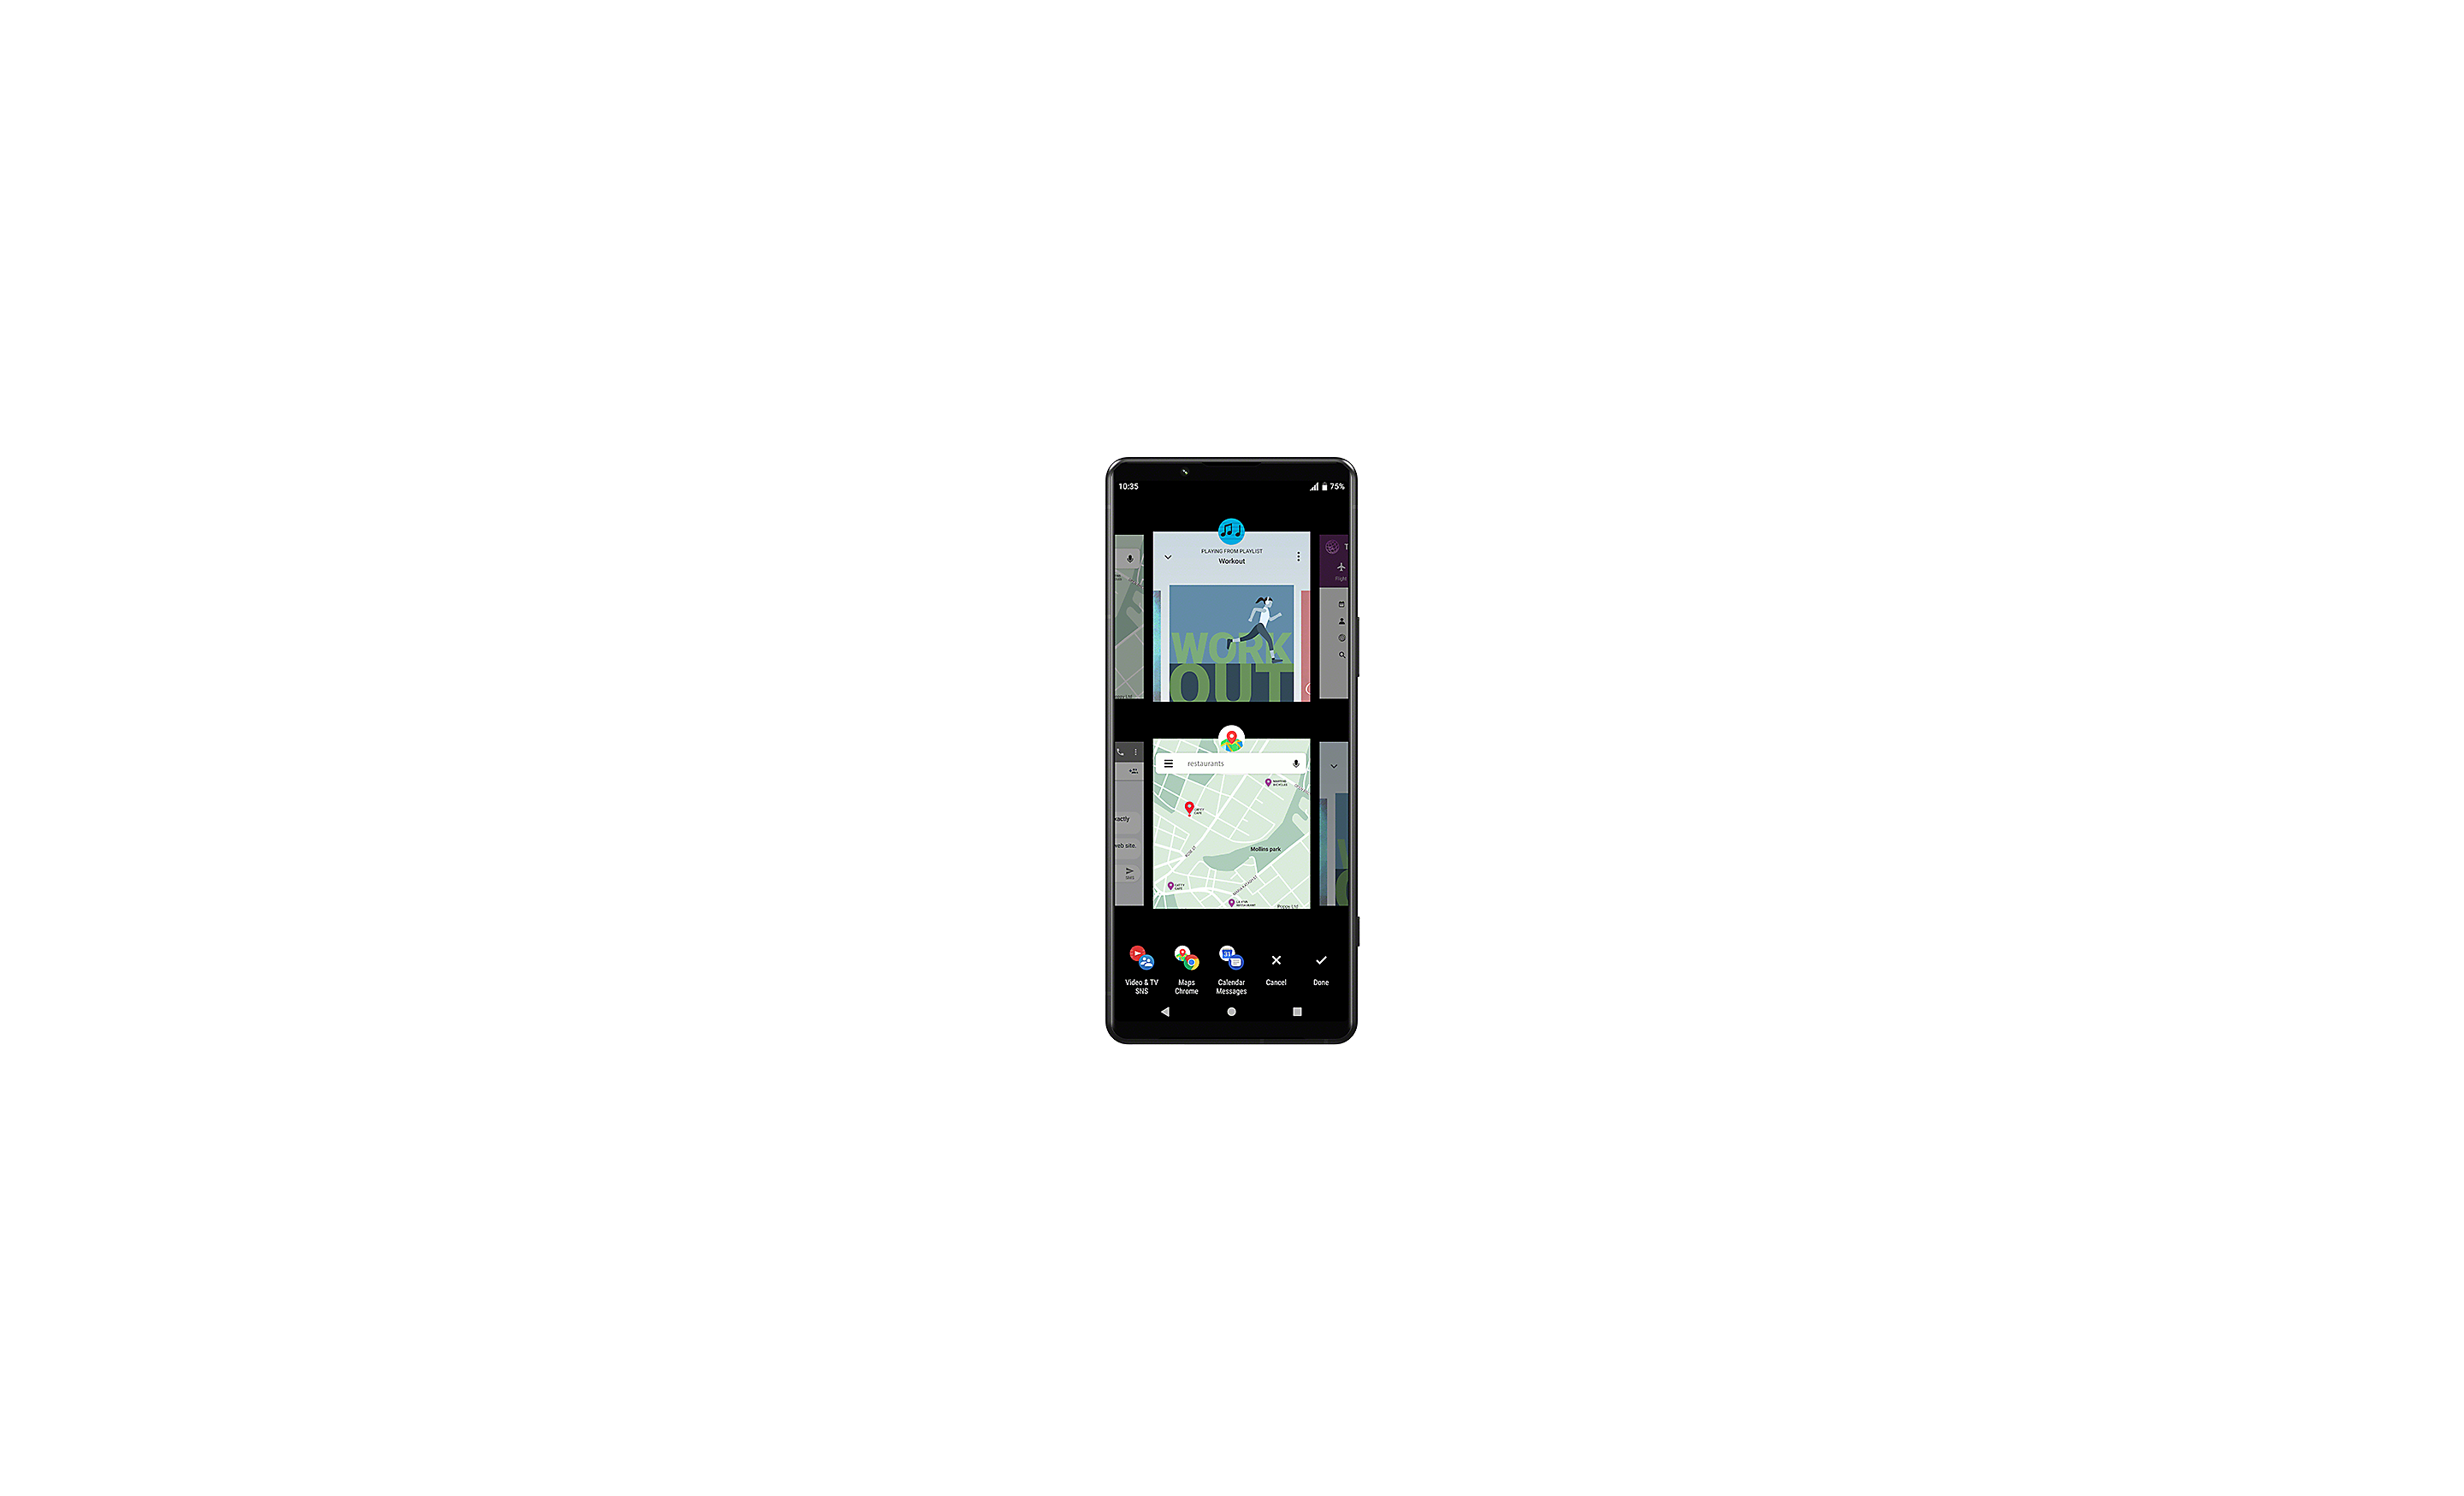 Xperia 智能手機顯示著多視窗模式切換用戶介面